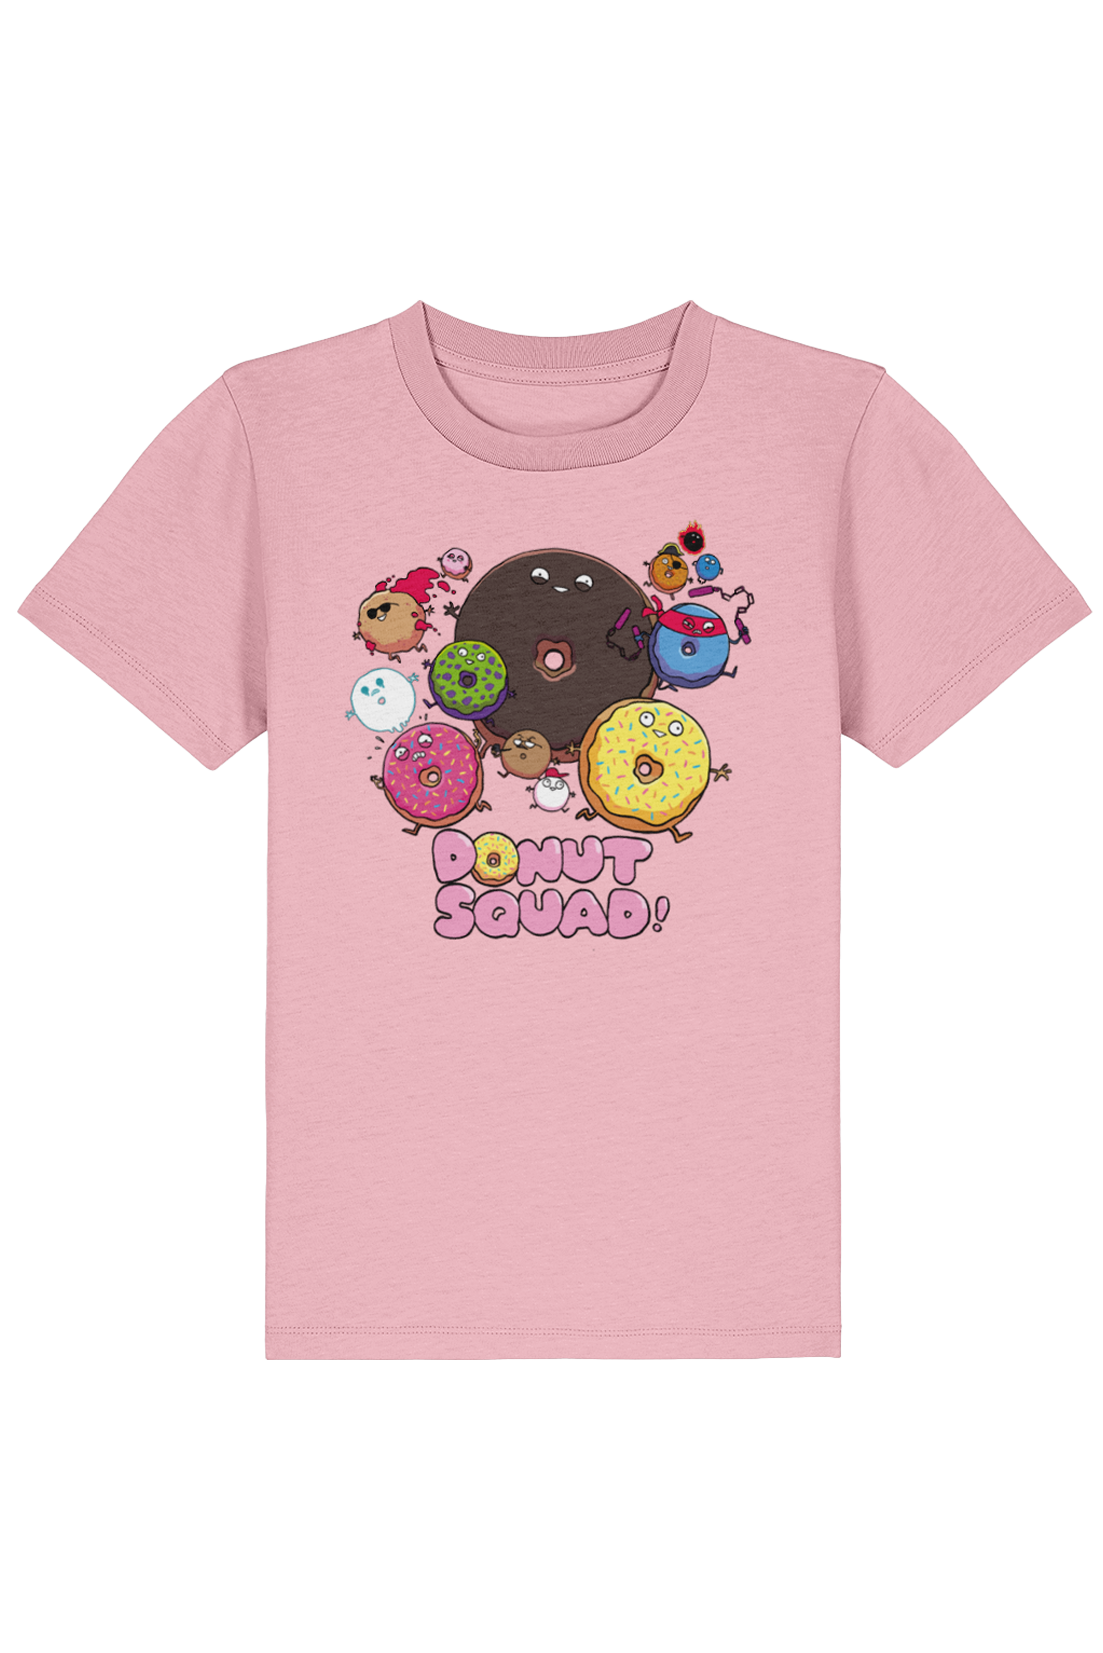 Donut Squad Team Shot kids t-shirt